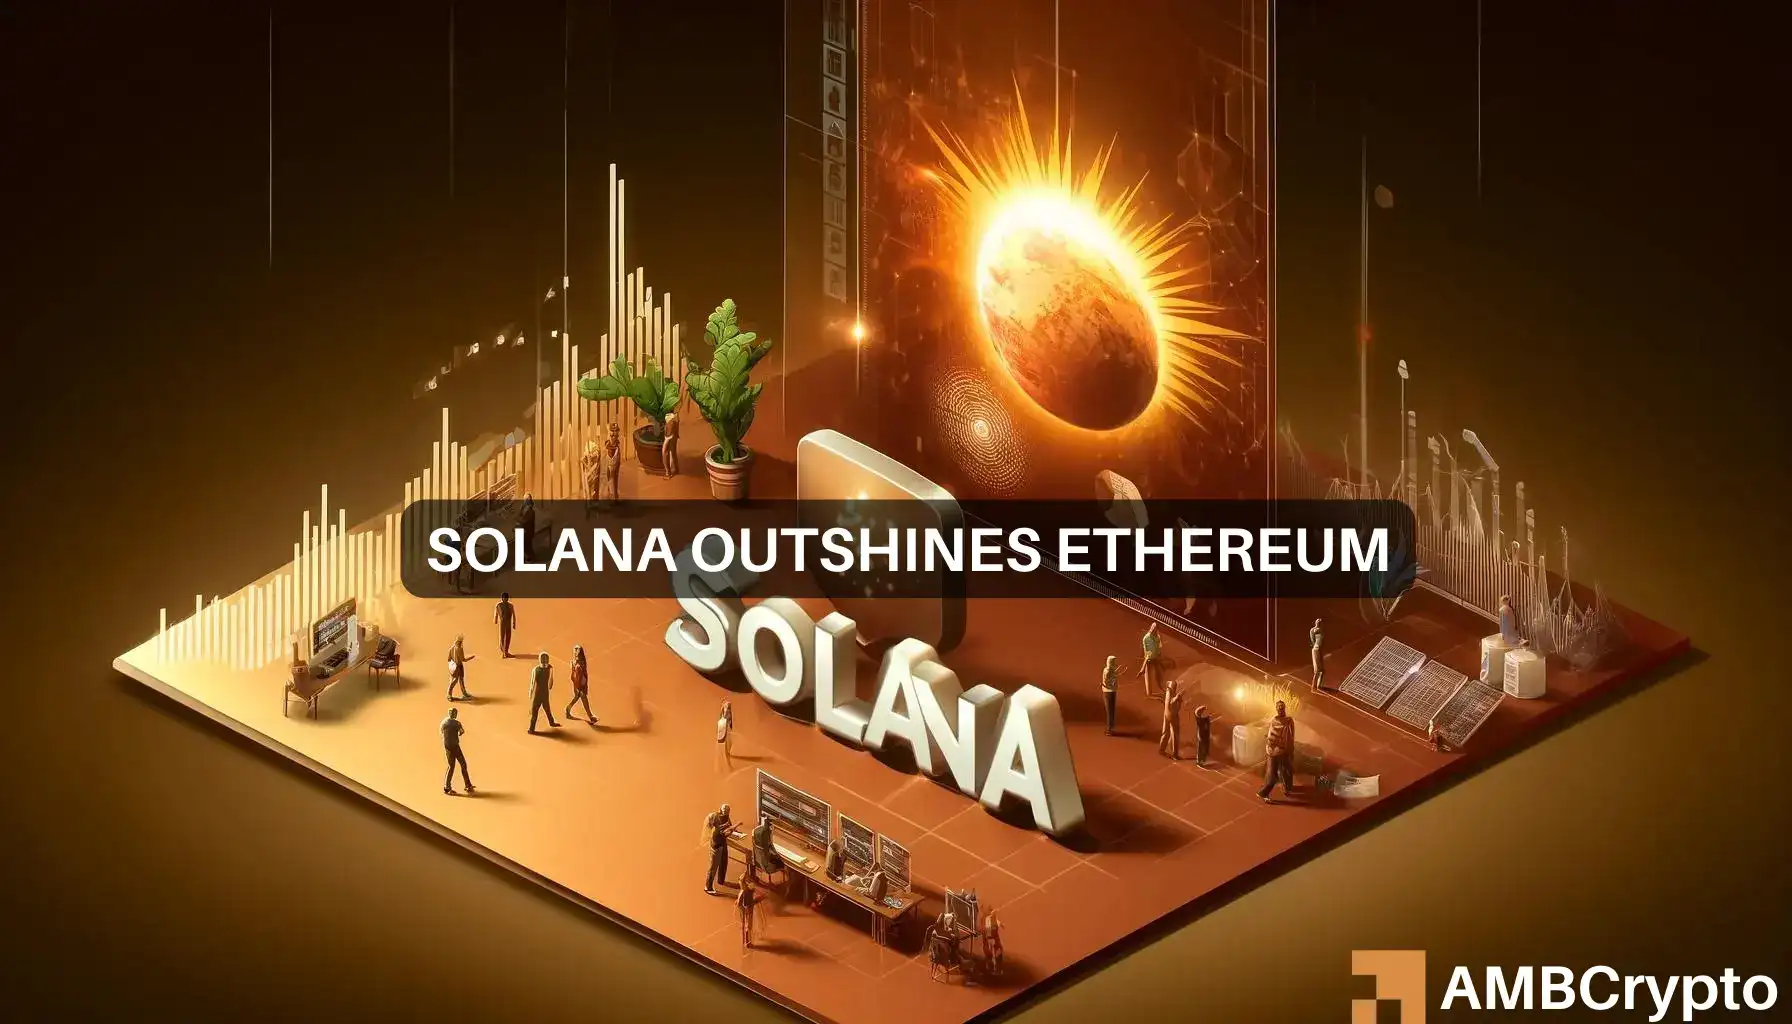 Solana outshines Ethereum